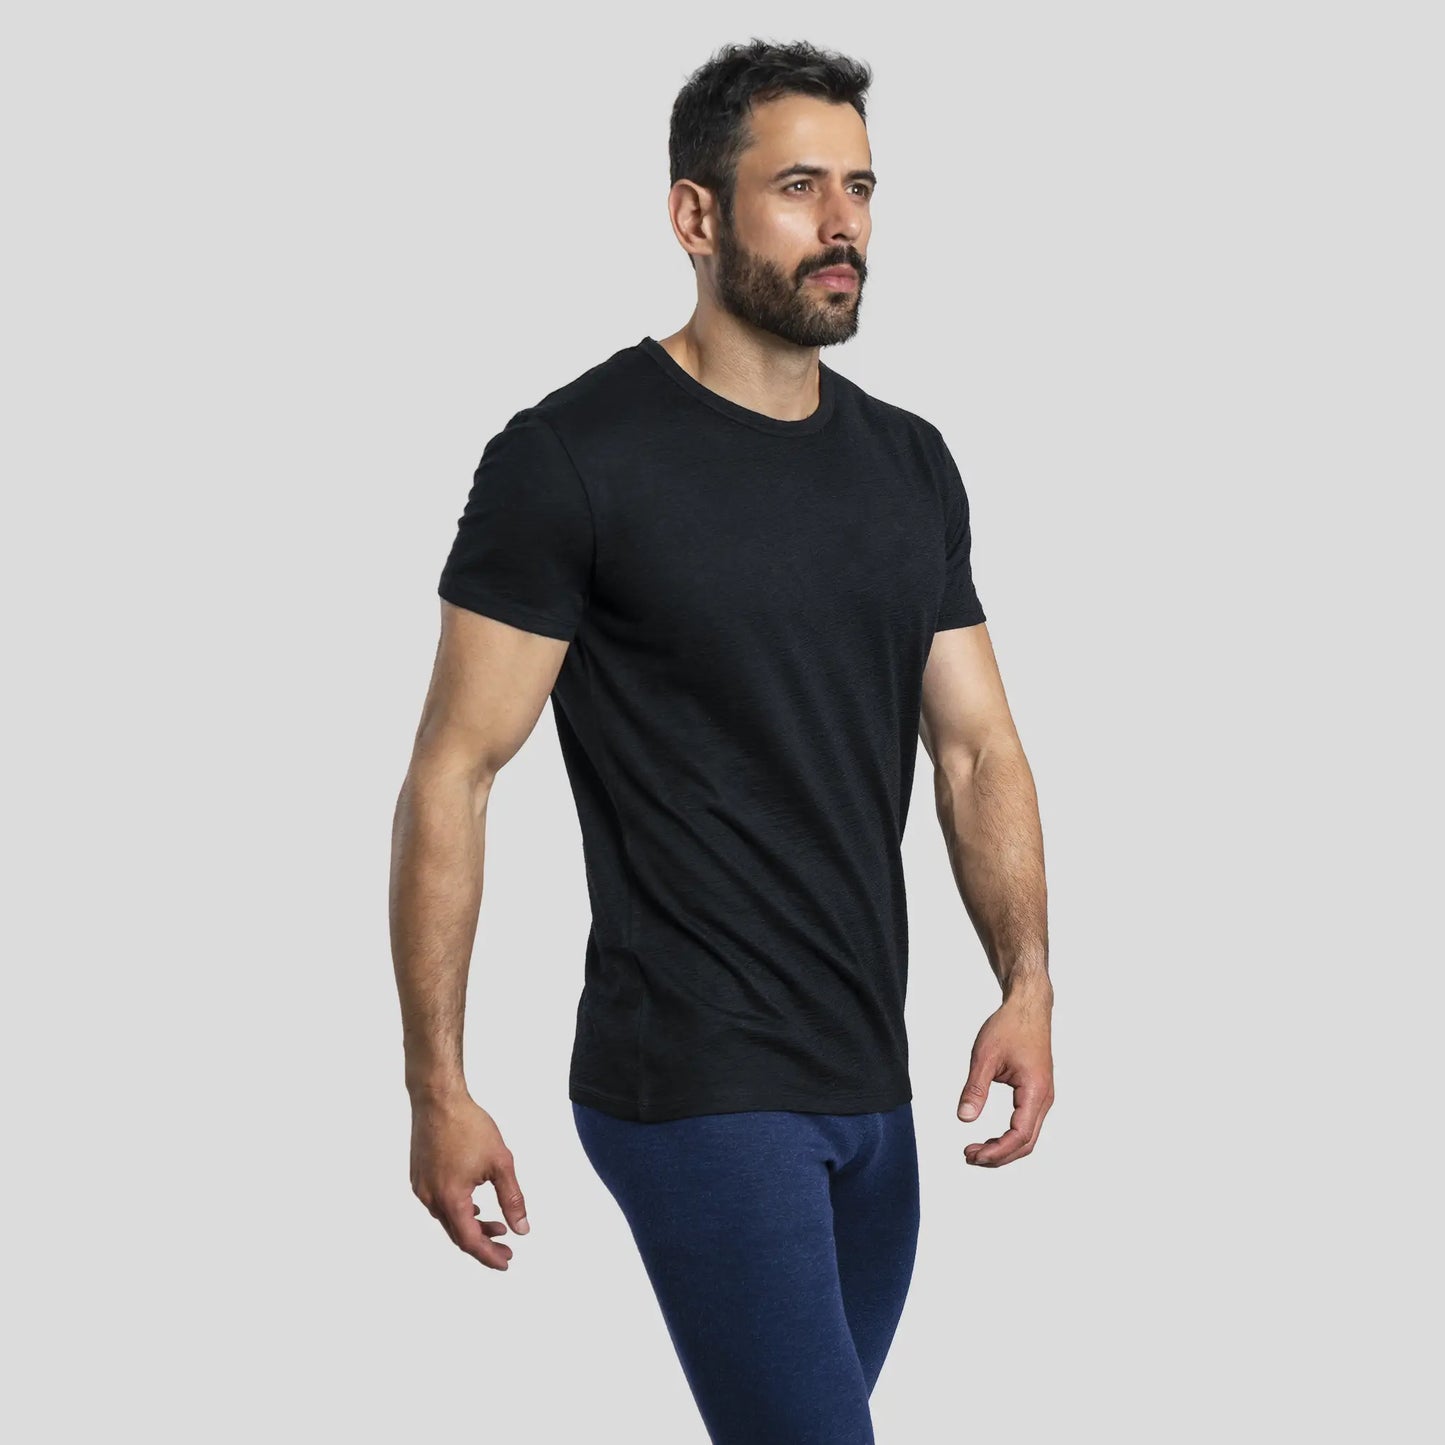 mens high performance crew neck tshirt color black